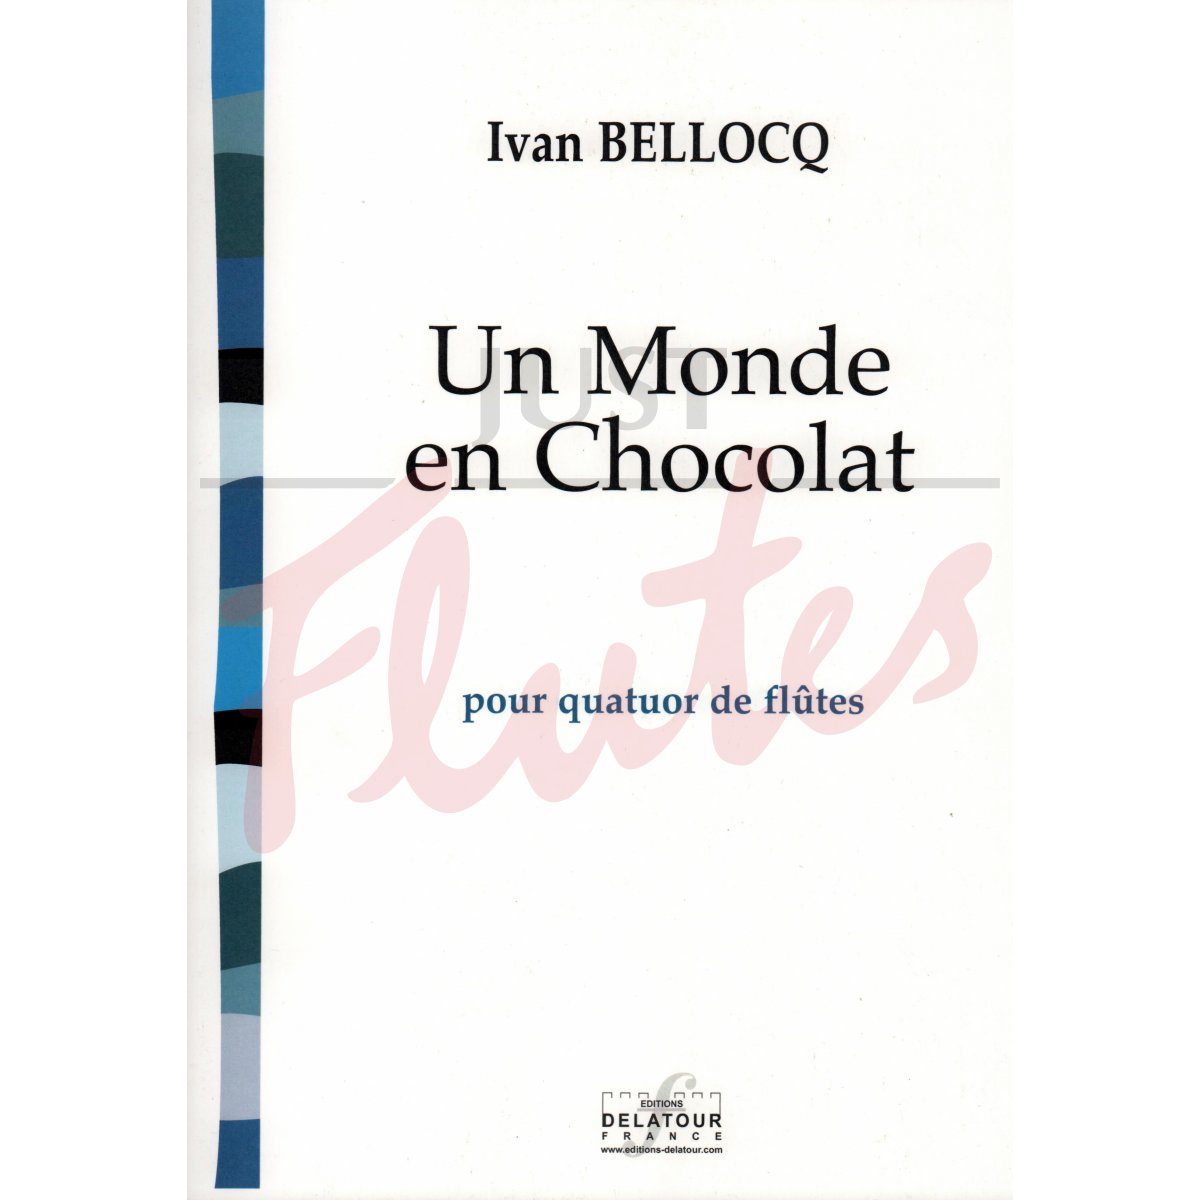 Un Monde en Chocolat (A World of Chocolate)